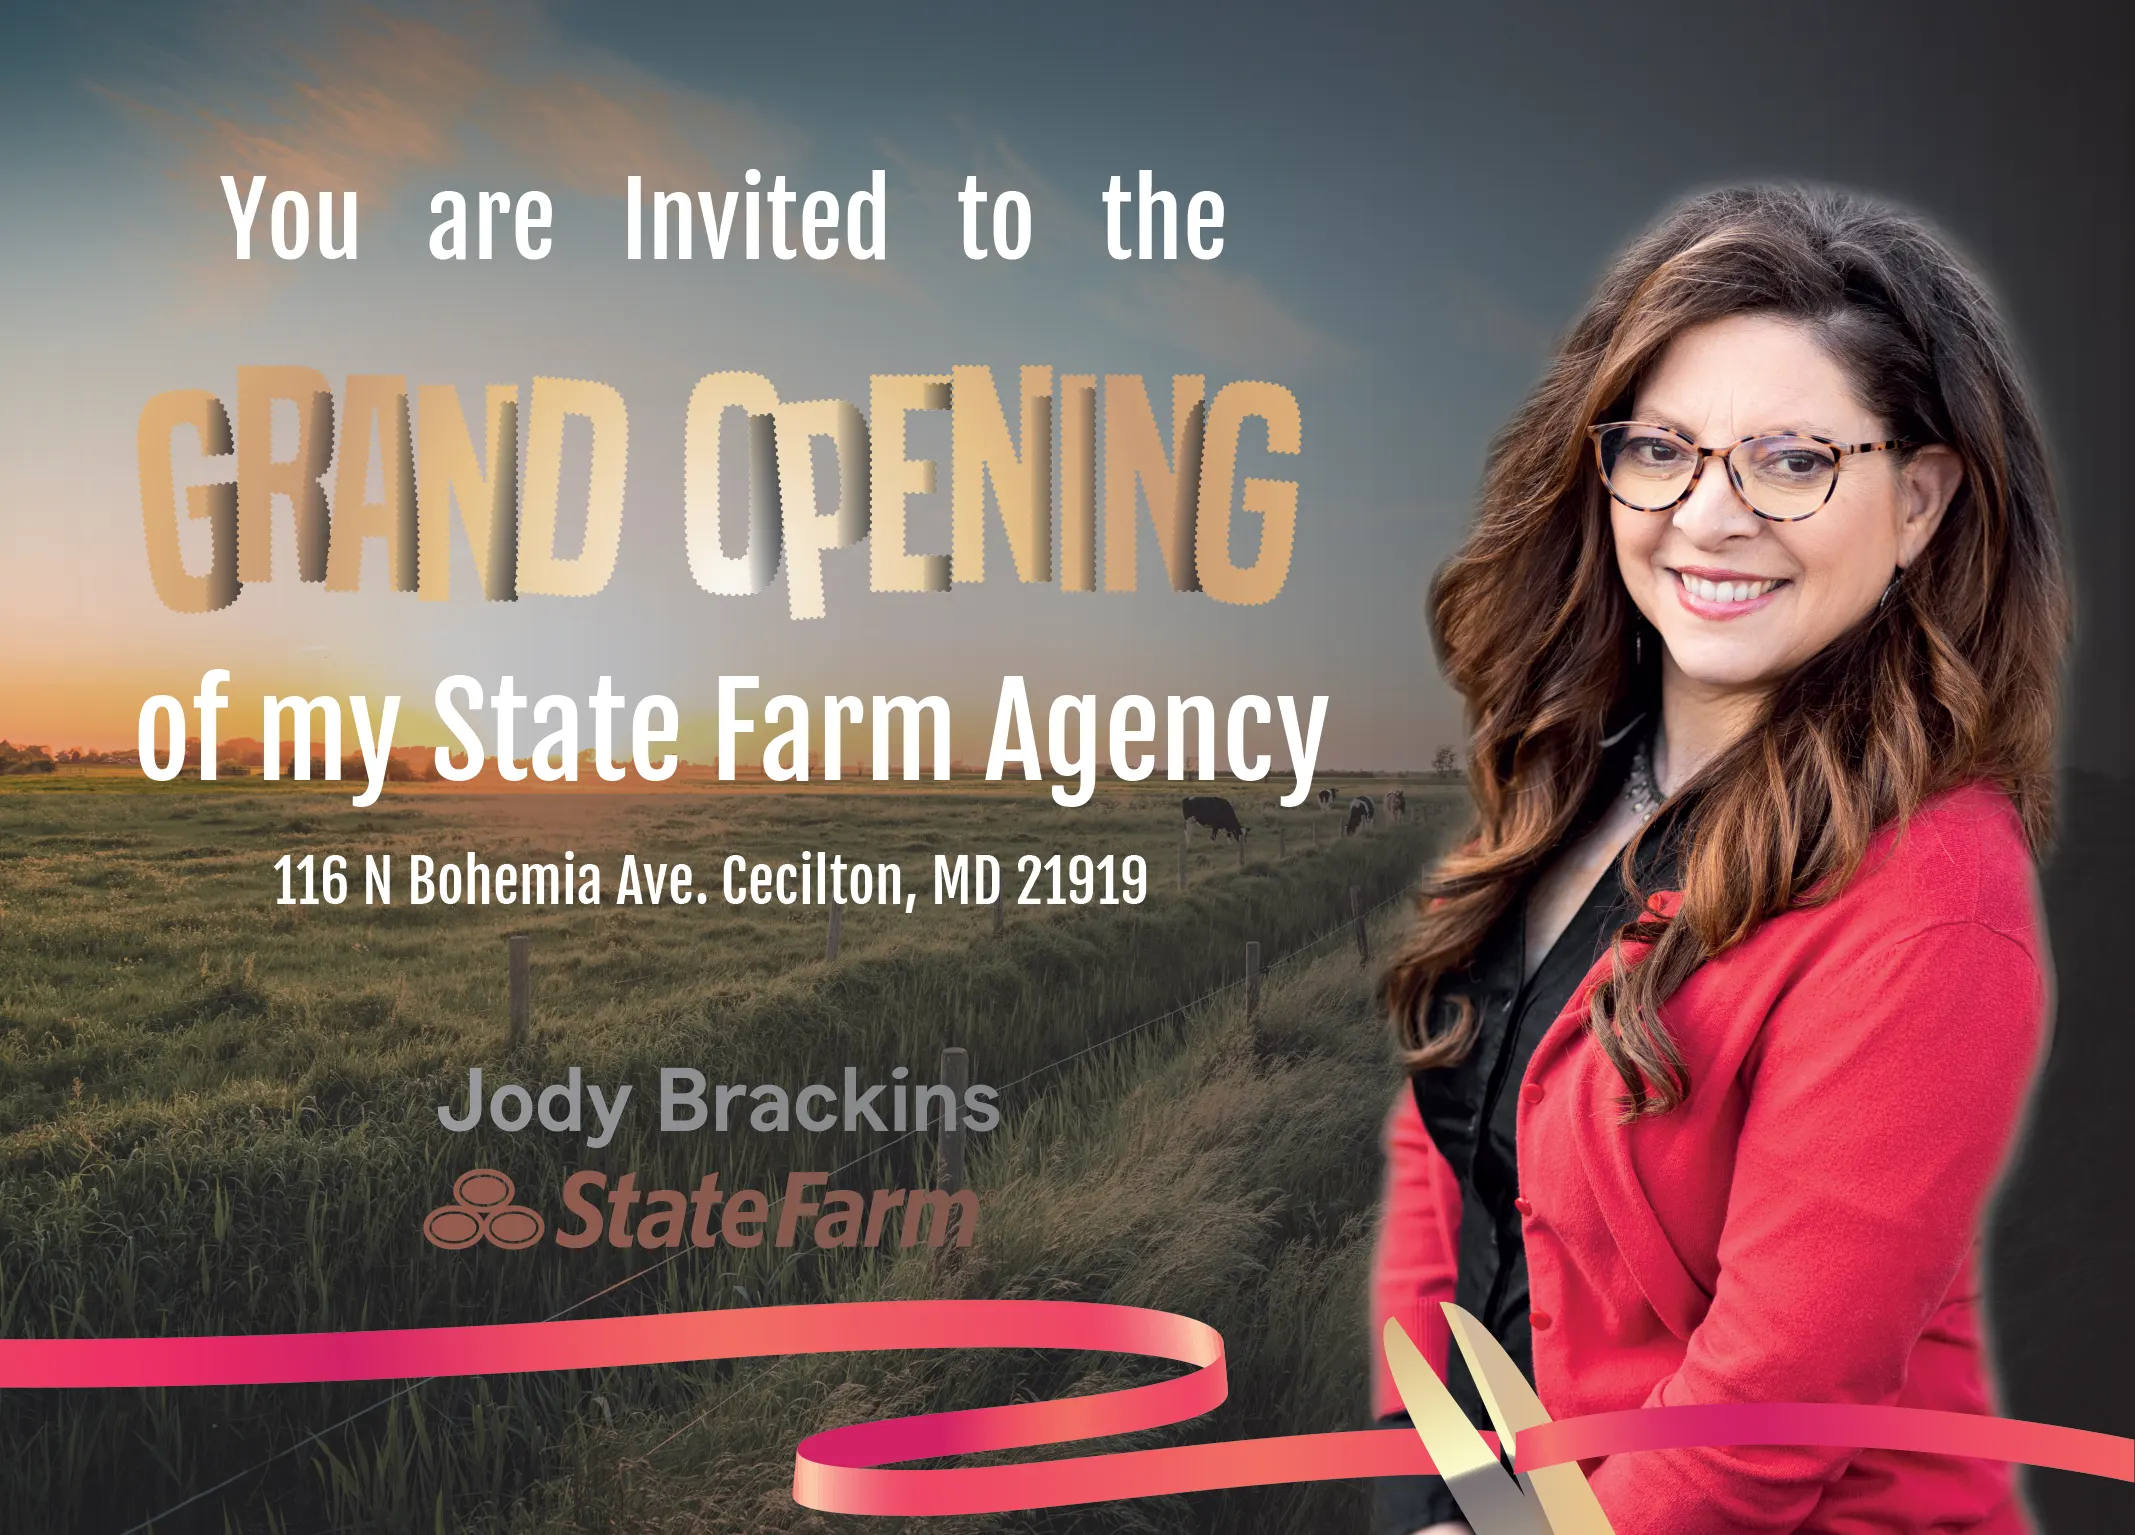 Jody Brackins' State Farm Agency Grand Opening